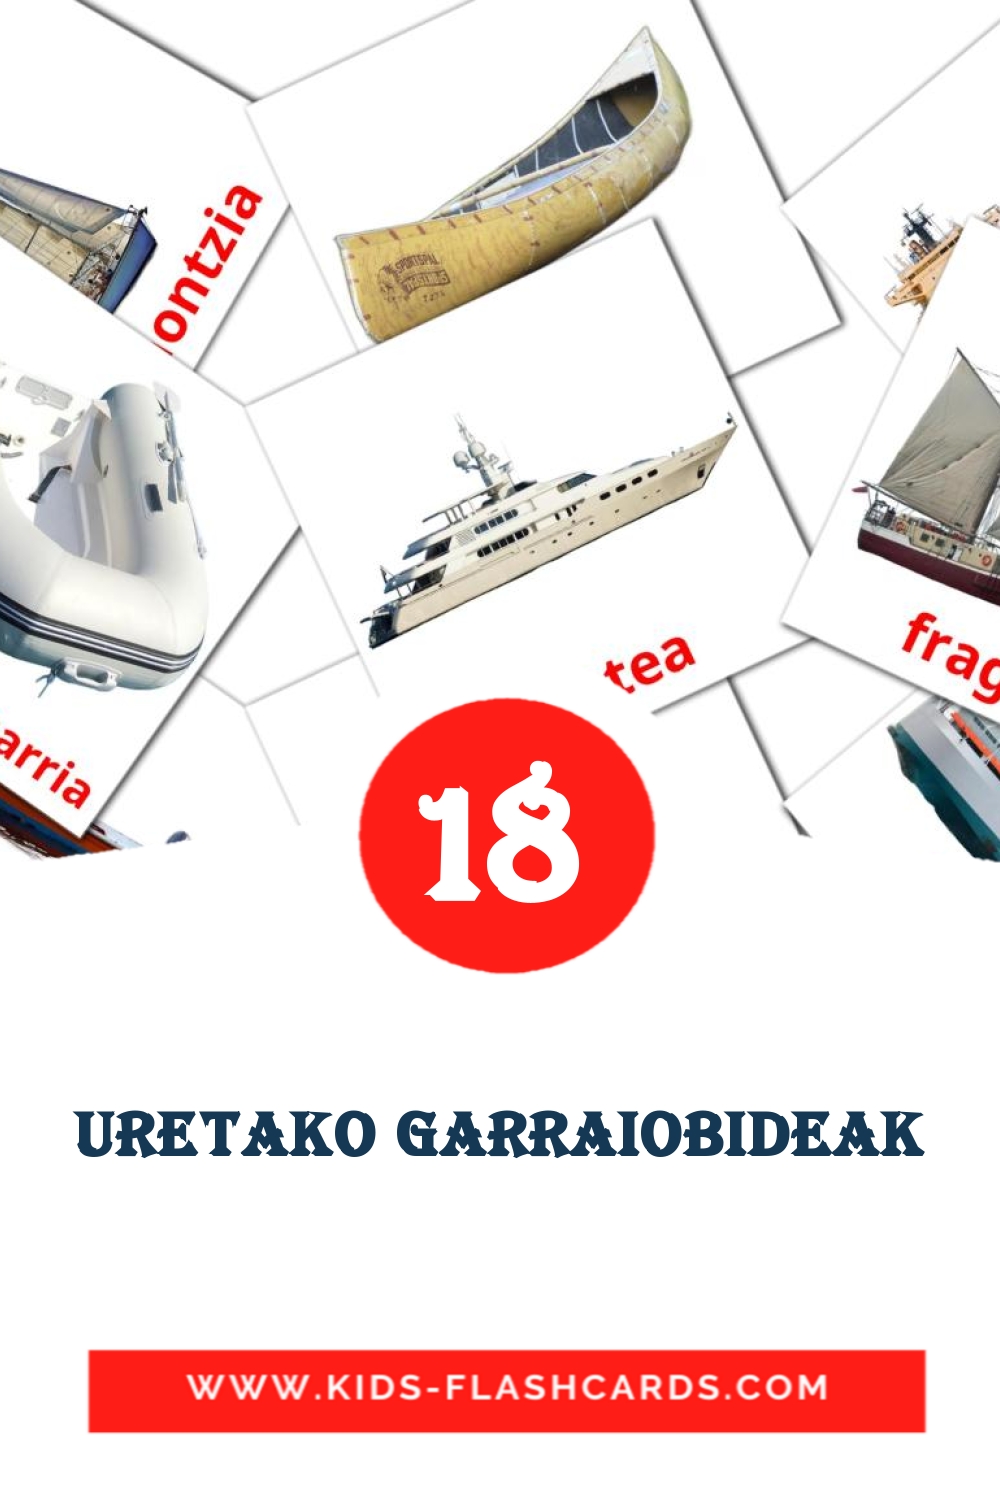 18 tarjetas didacticas de Uretako garraiobideak para el jardín de infancia en euskera